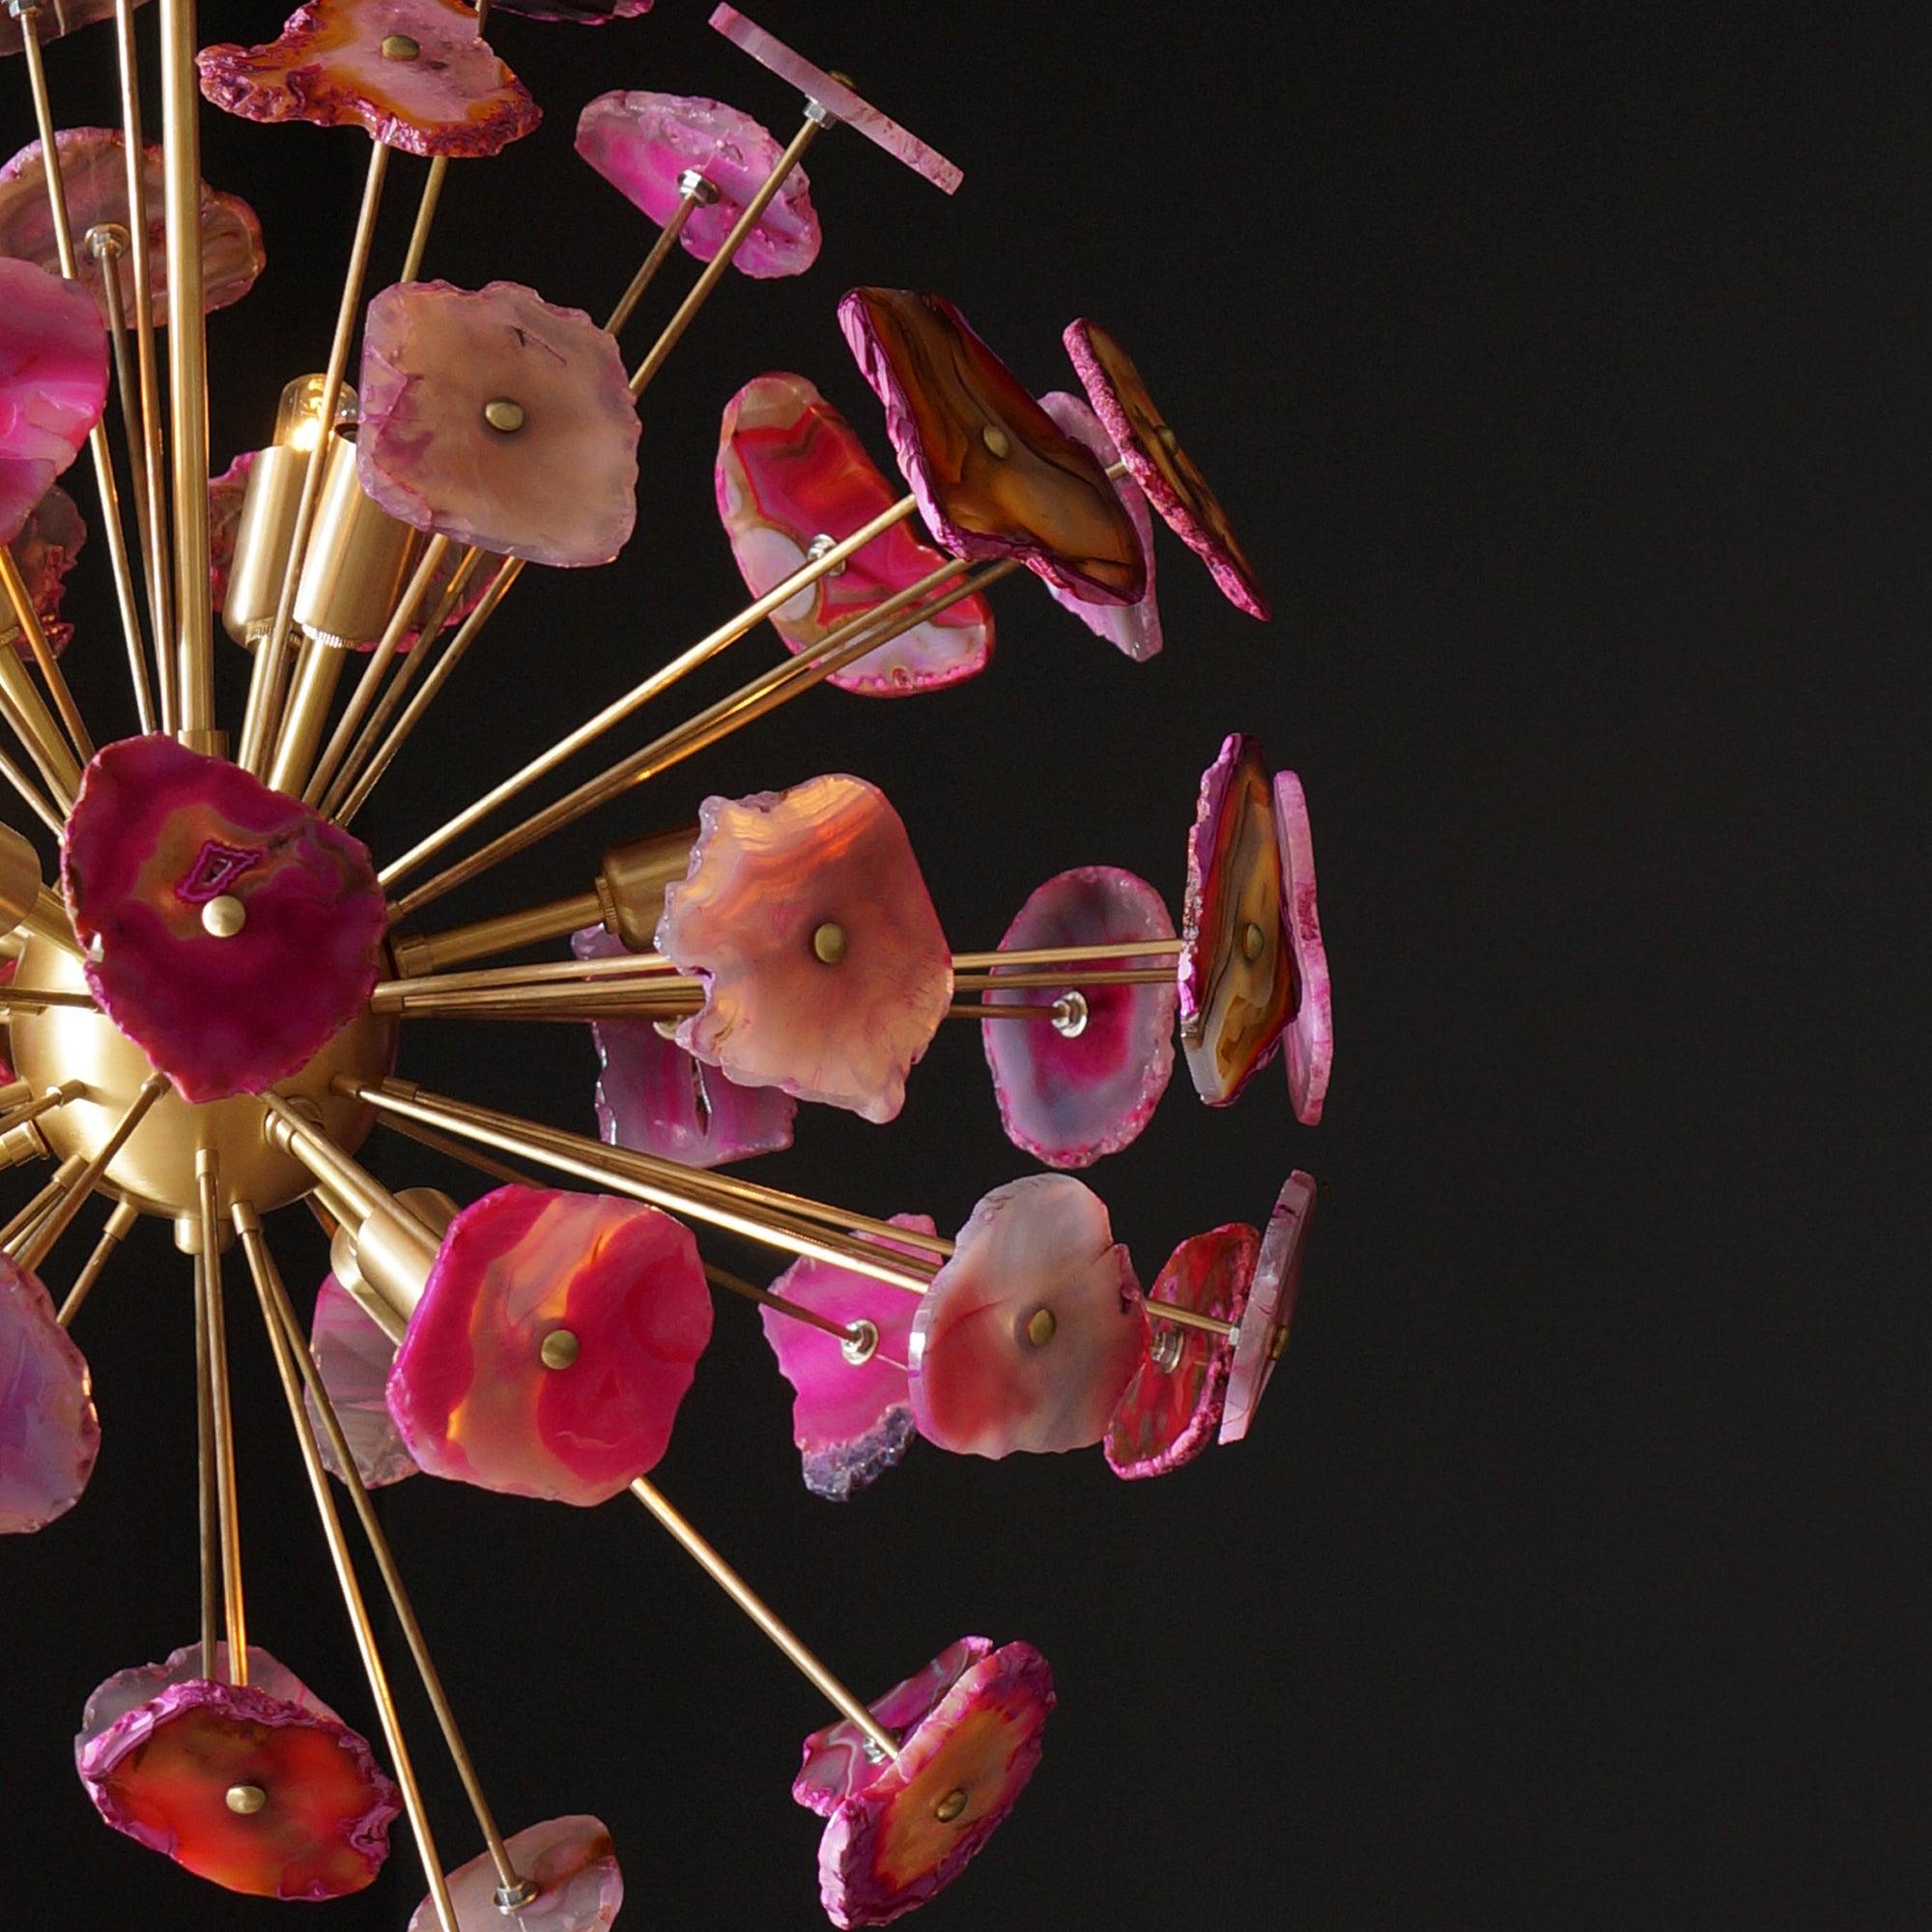 Modern Brass Sputnik Chandelier Light Fixture With Pink Agate Stone - Doozie Light Studio